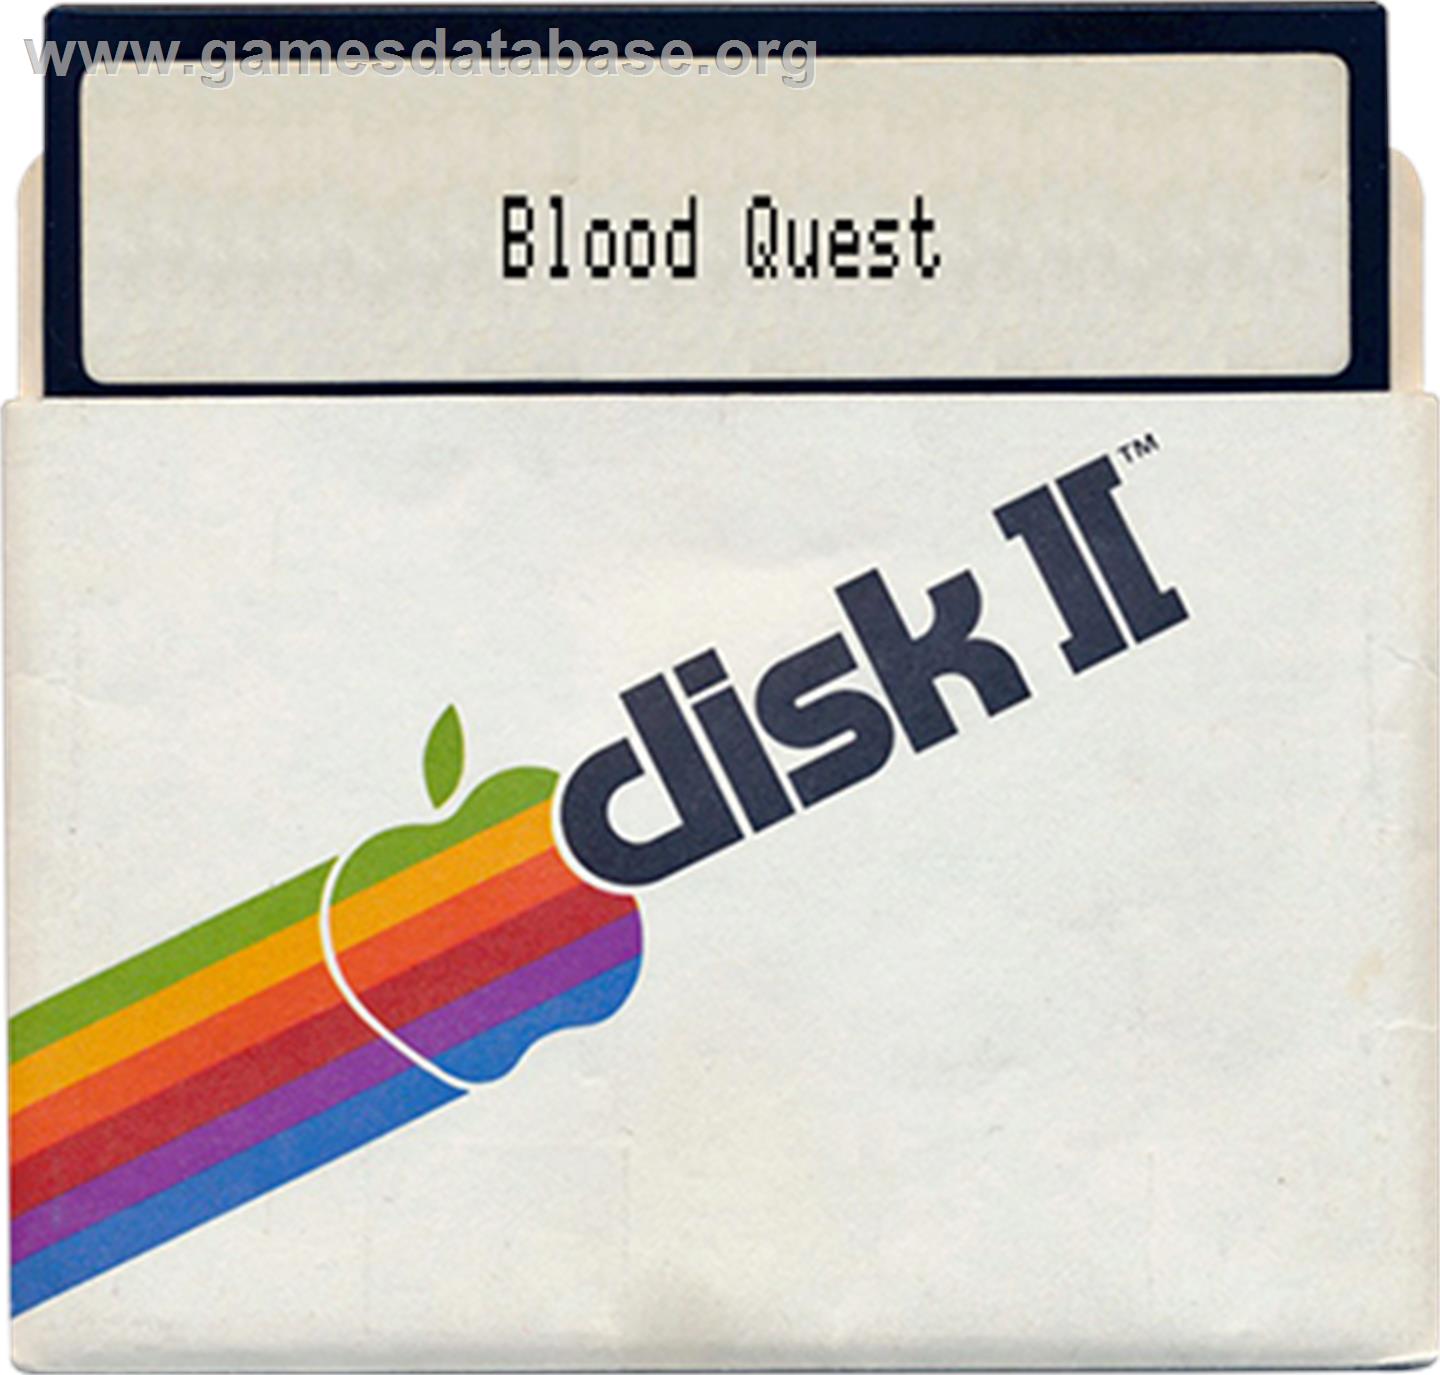 Dallas Quest - Apple II - Artwork - Disc